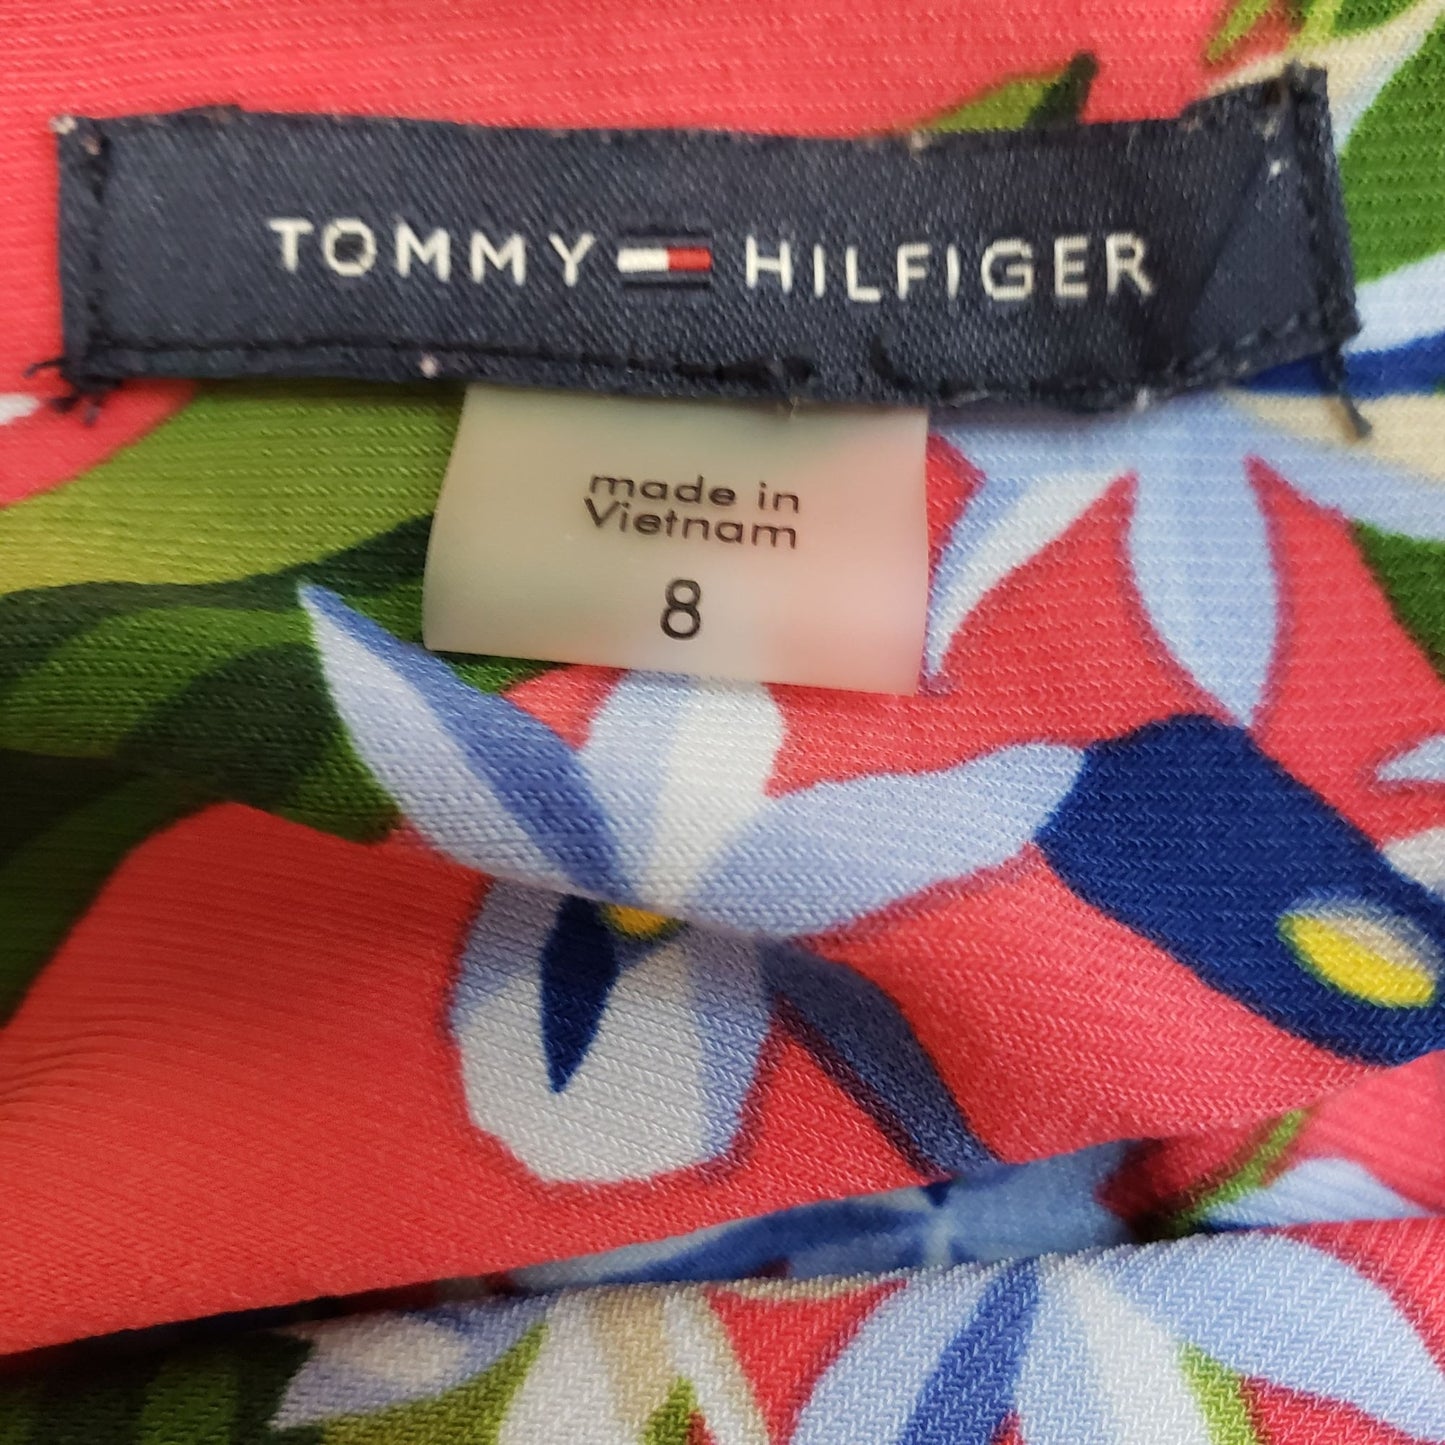 Tommy Hilfiger Floral Tropical Print Shift Dress Size 8